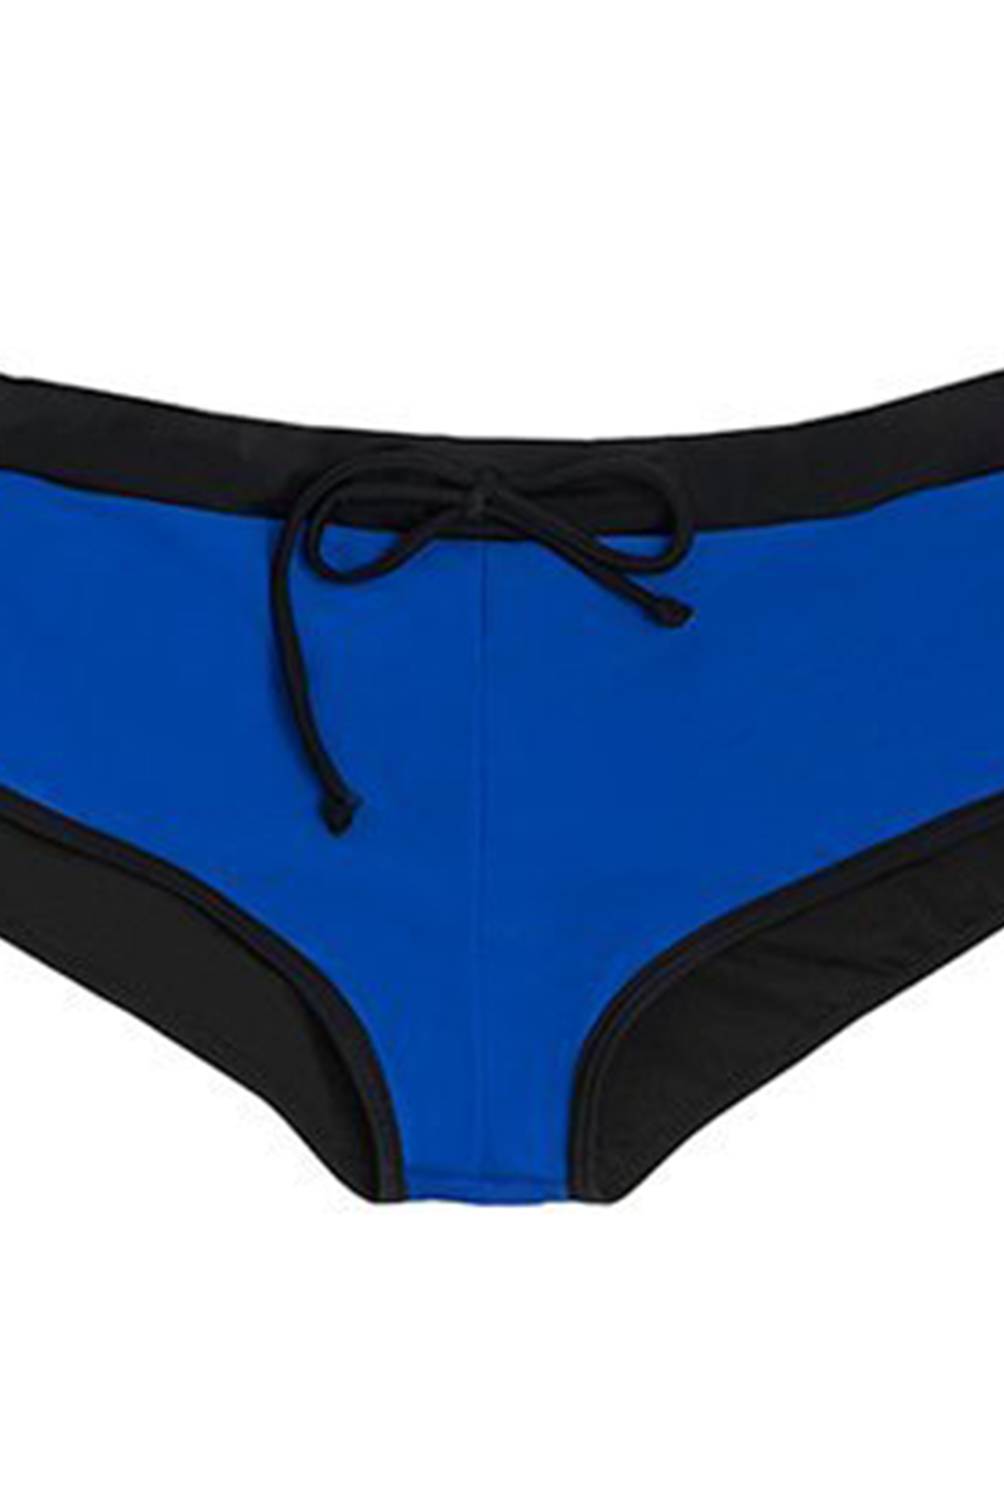 SAMIA - Short Hot Pant Brasilero Azul